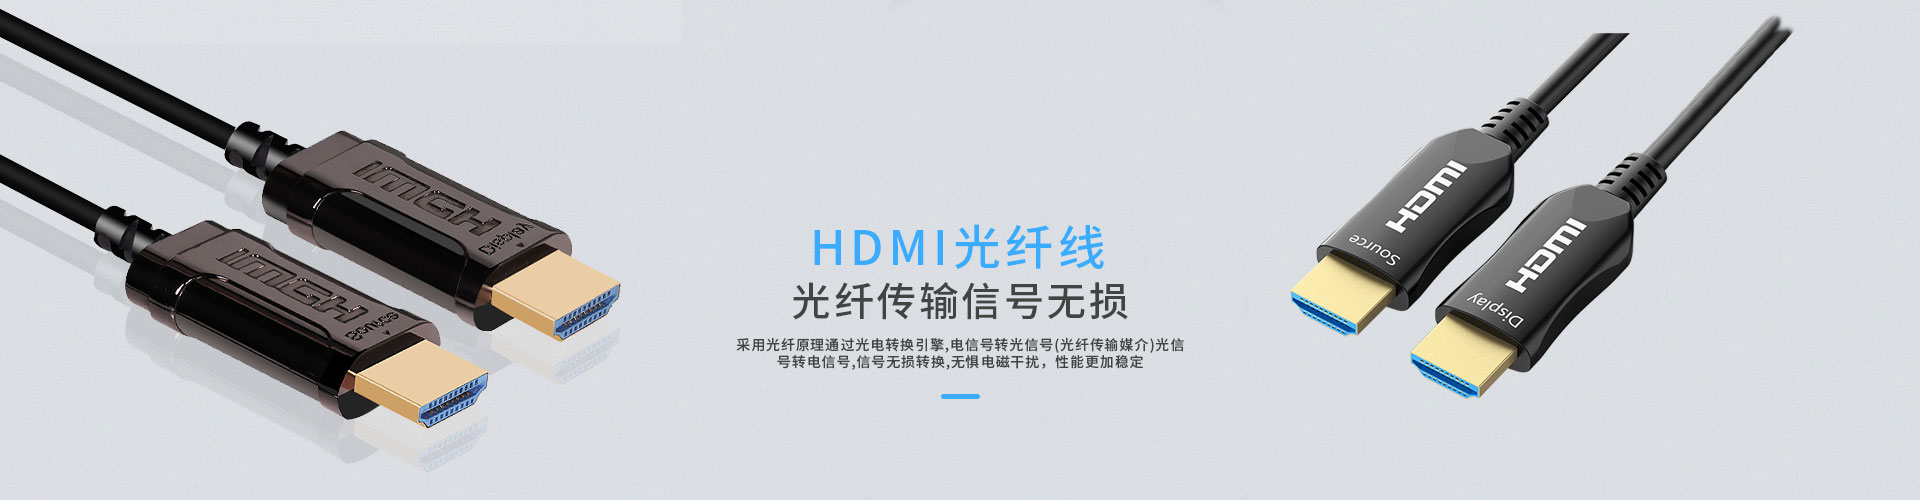 武汉hgα030皇冠HDMI